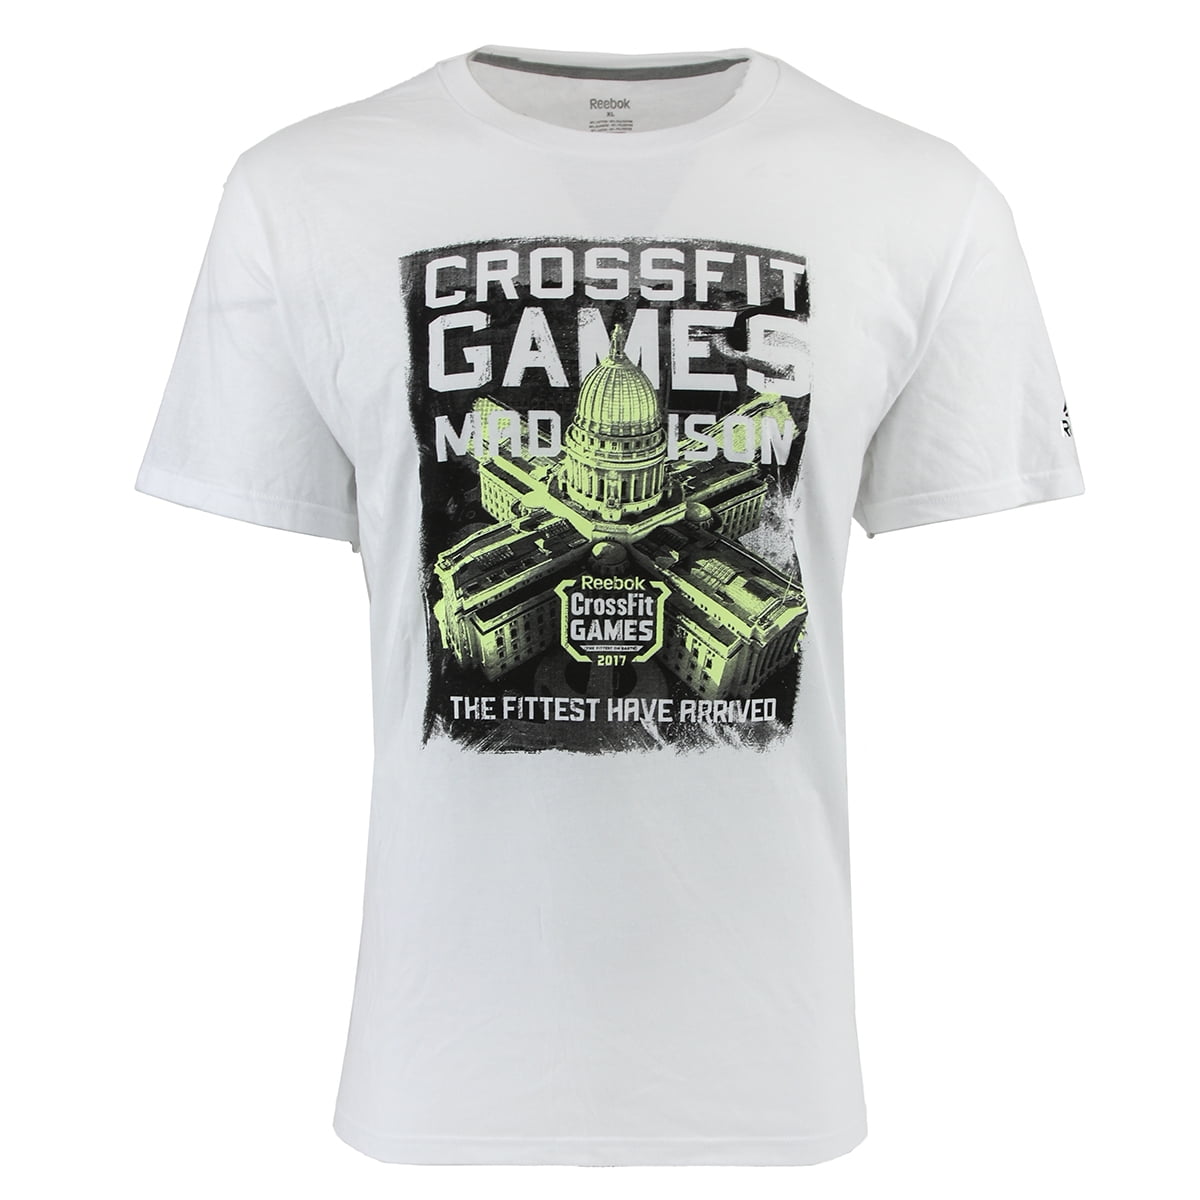 reebok crossfit games 2017 t shirt